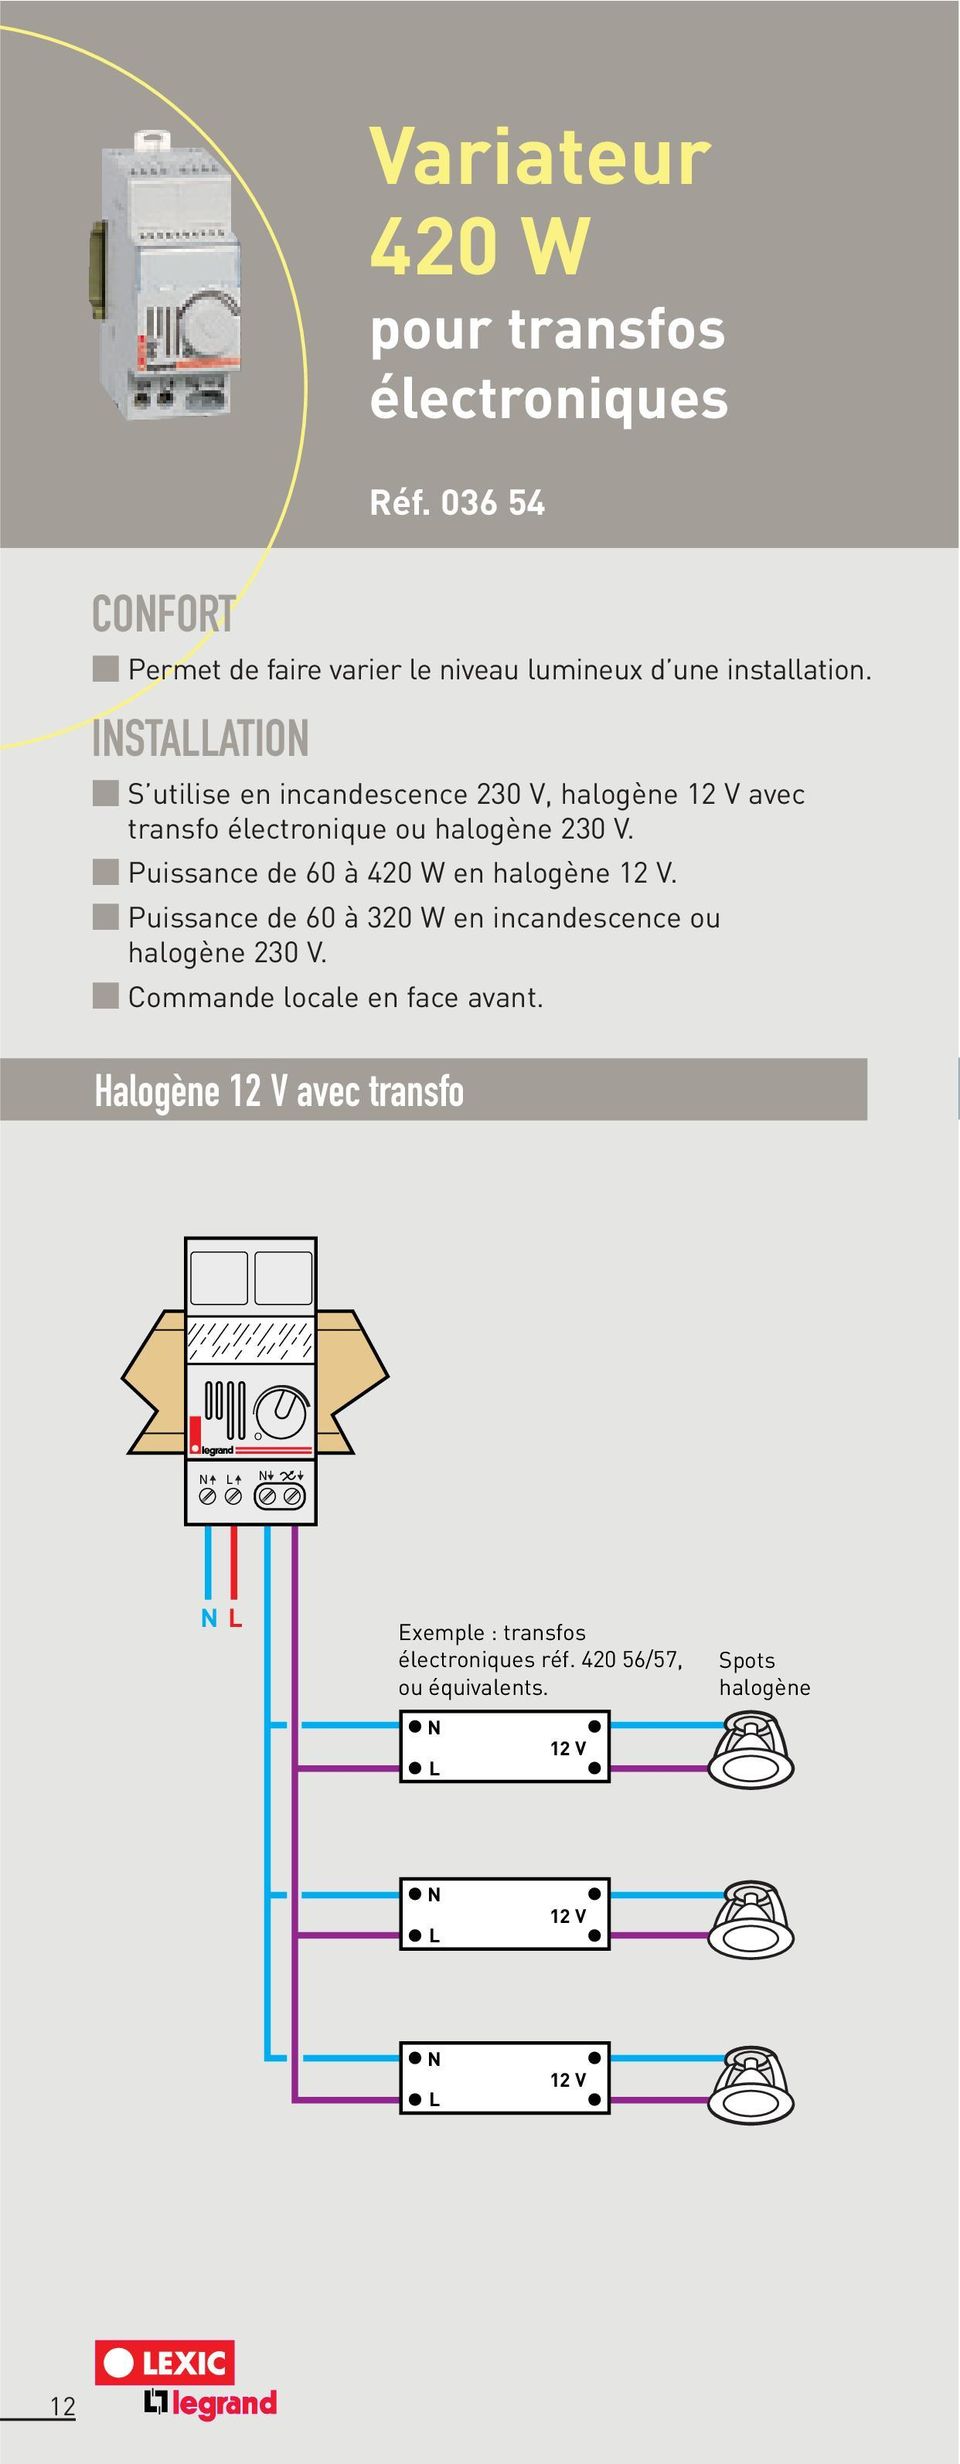 ISTAATIO S utilise en incandescence 230 V, halogène 12 V avec transfo électronique ou halogène 230 V.